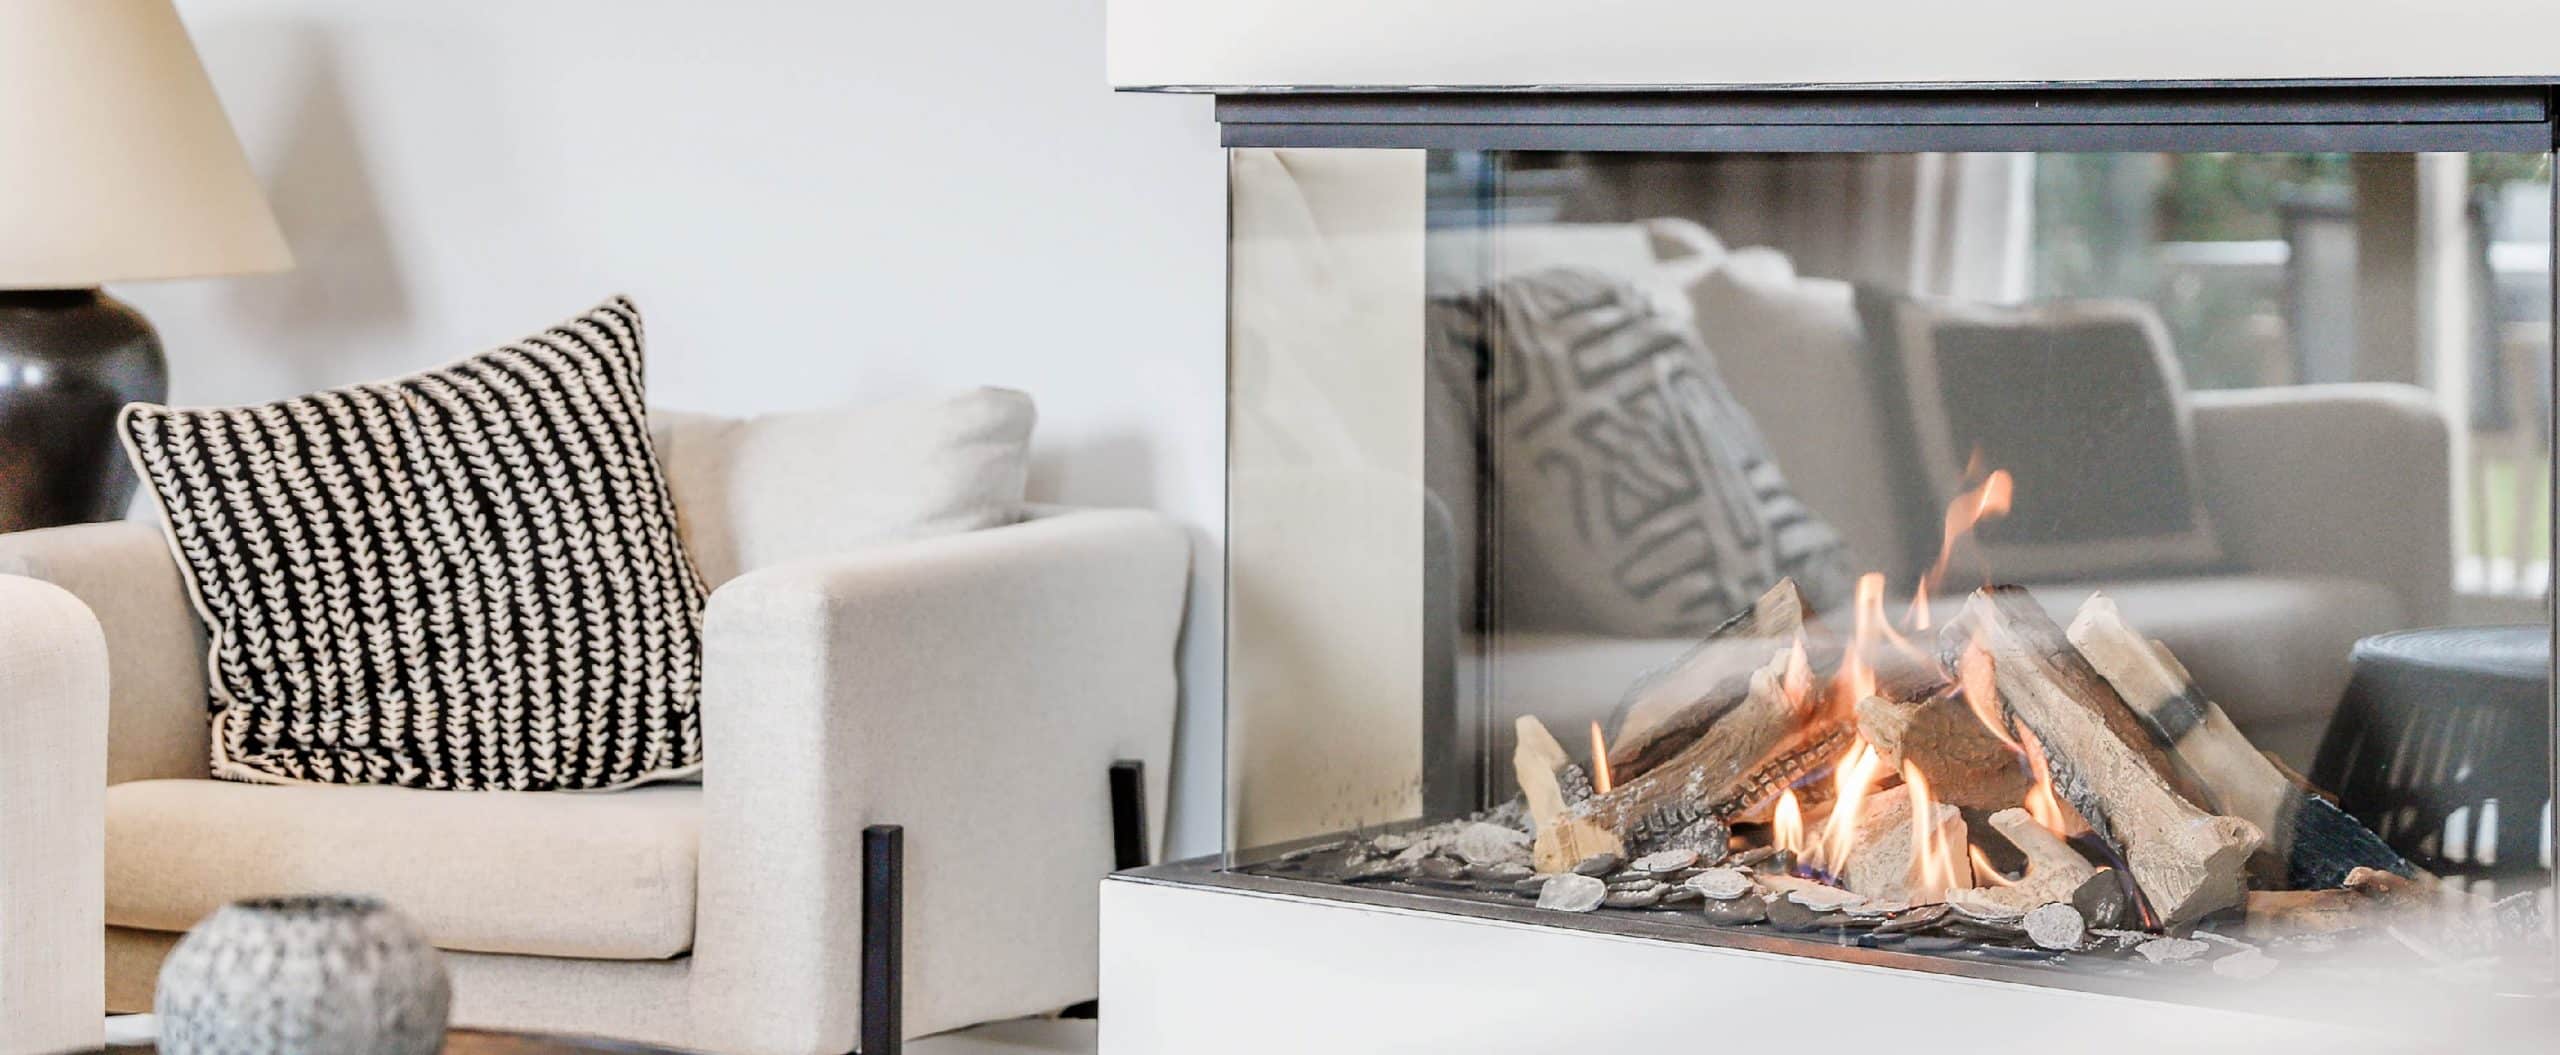 custom designed fireplace in bright living room